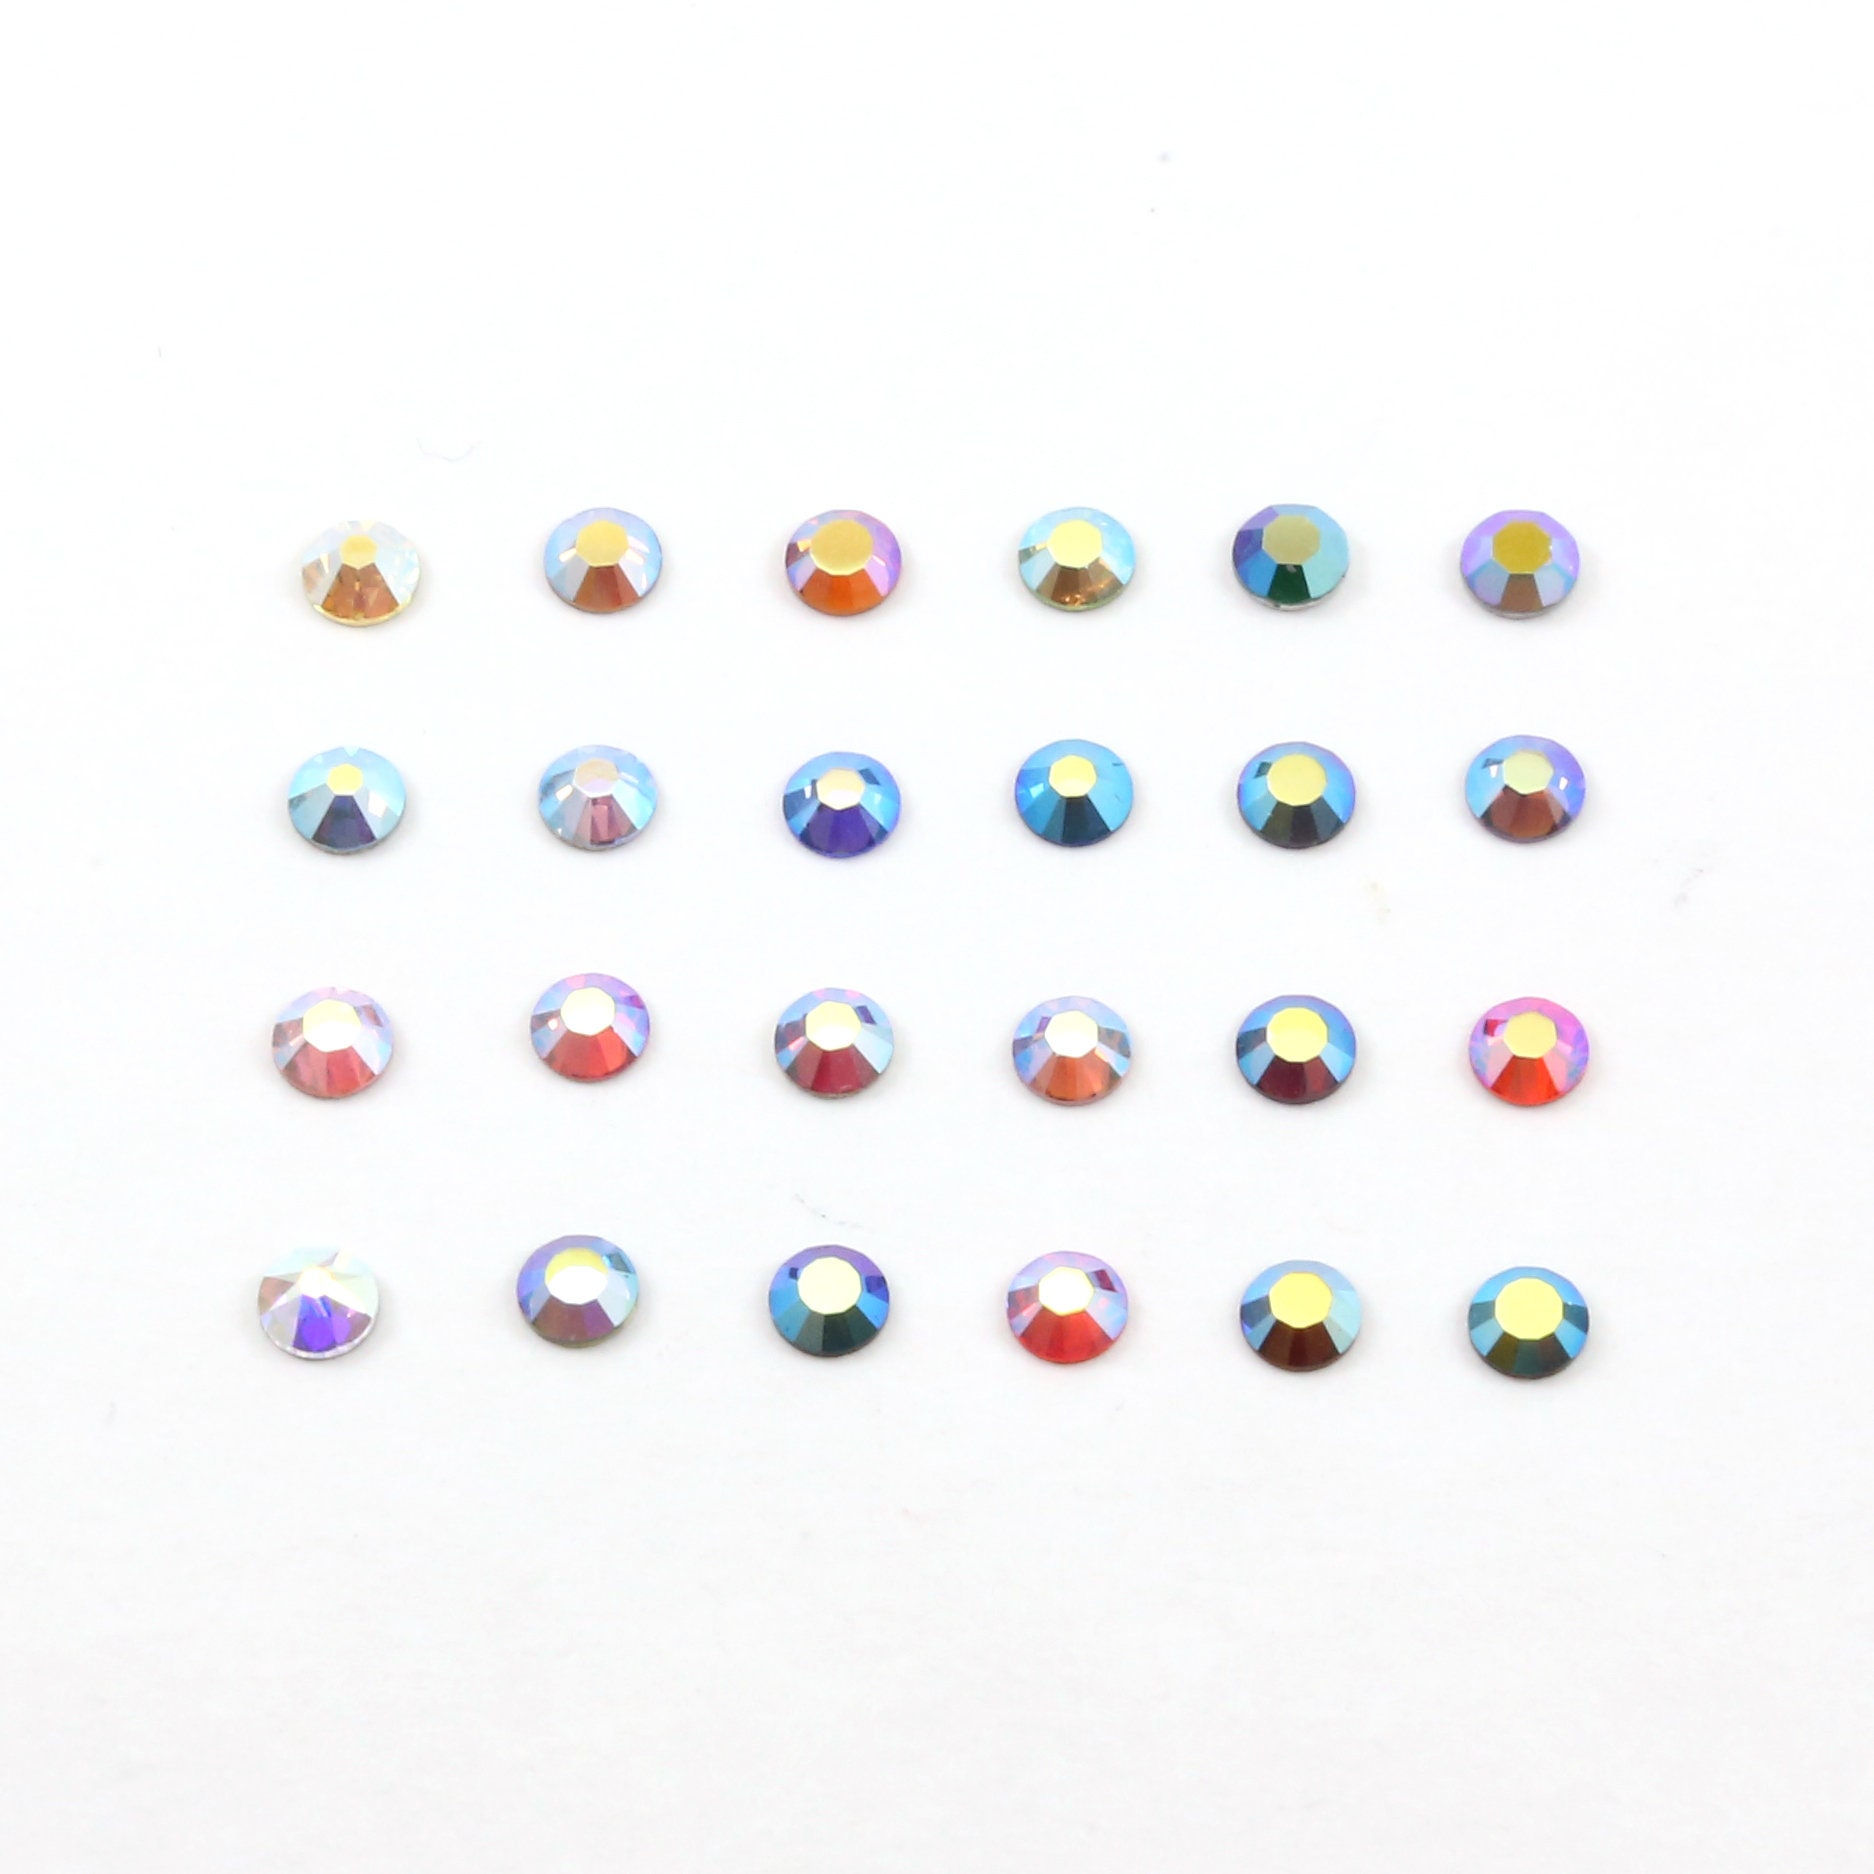 Preciosa Viva Crystal Rhinestones Flatback - Light Peach - 144 Pieces  Pieces - 3.8mm 16ss (72 Pieces) 